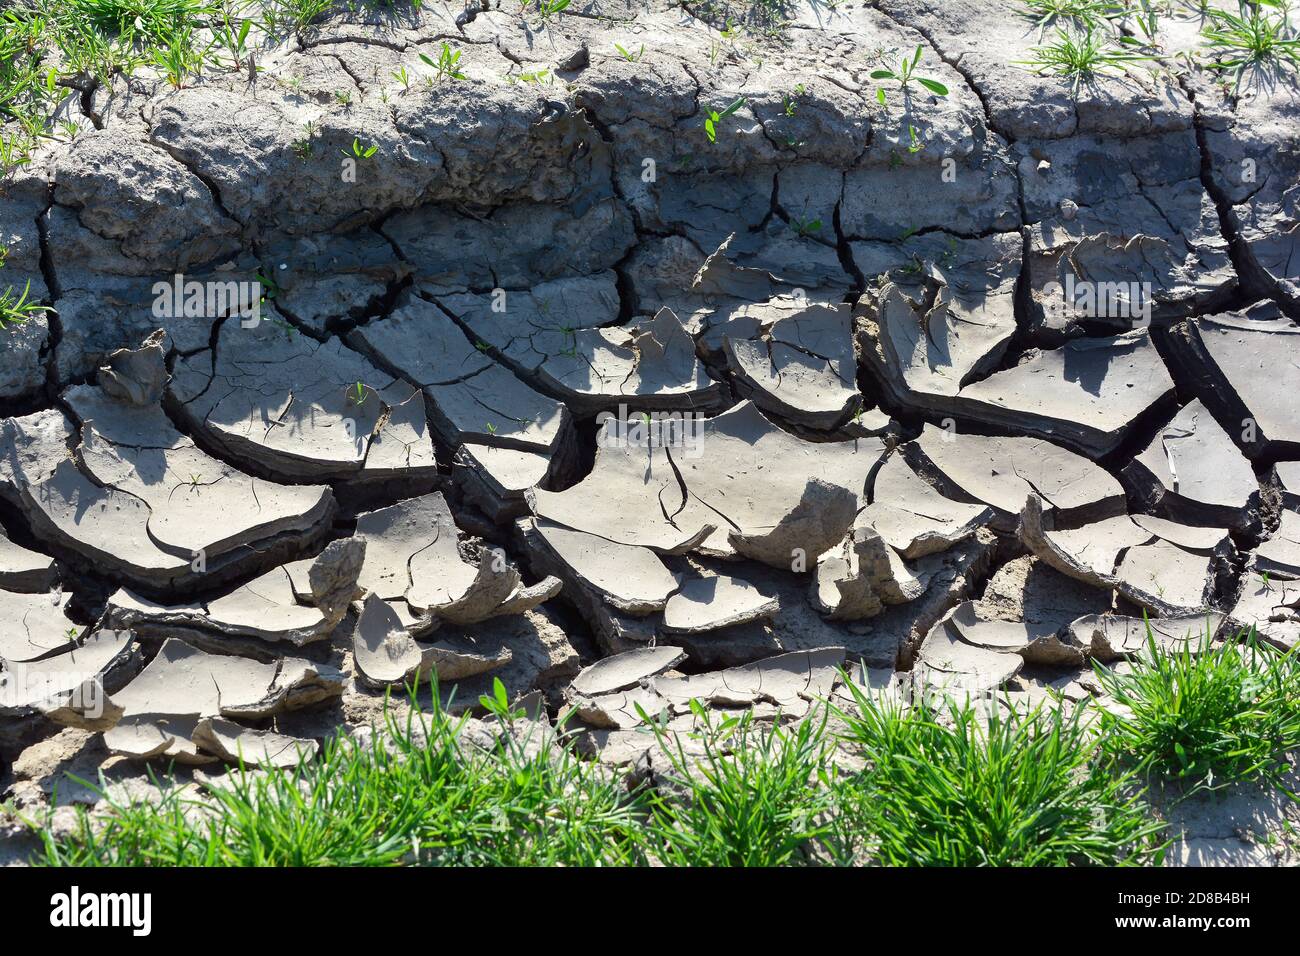 dried up soil, Hortobágy, Hajdú-Bihar County, Hungary, Magyarország, Europe, Hortobágy National Park Stock Photo